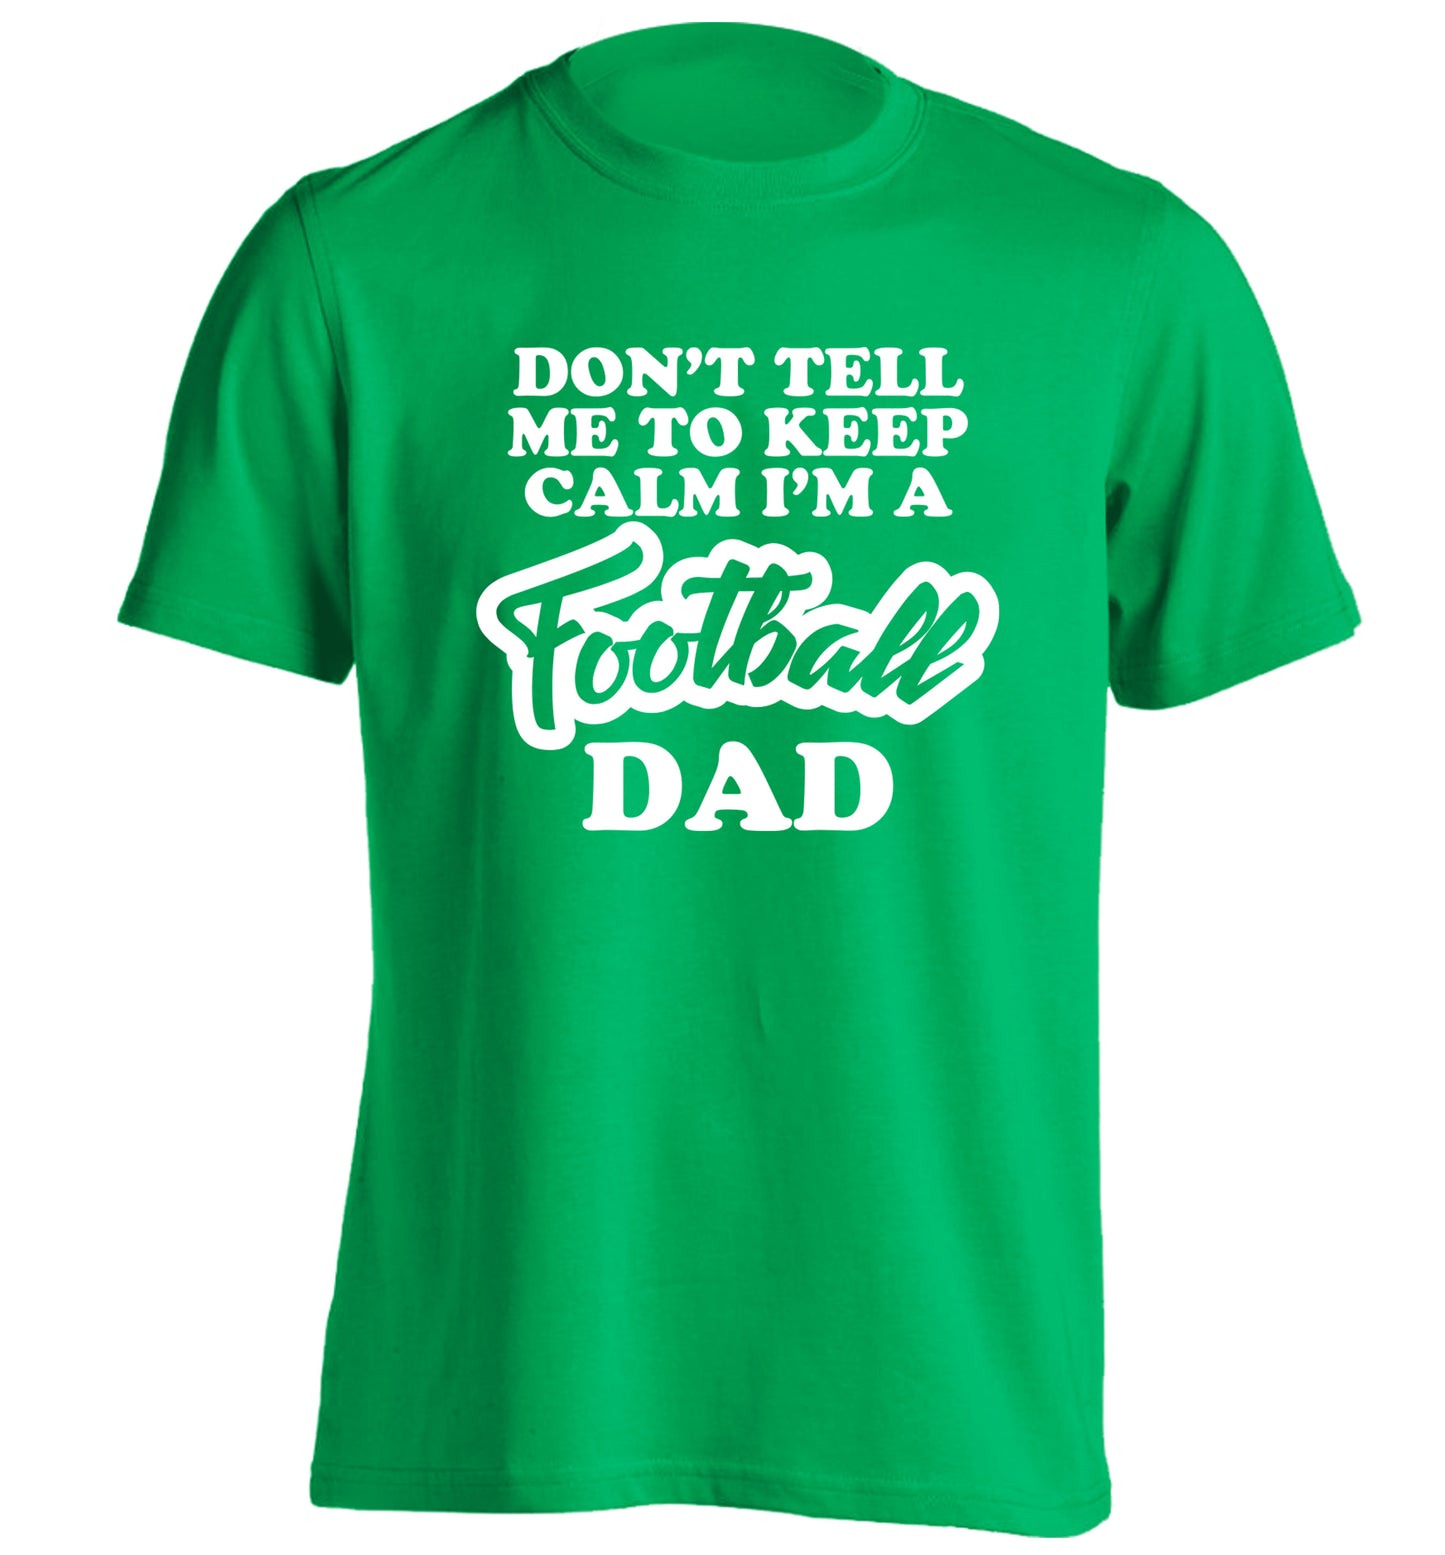 Don't tell me to keep calm I'm a football dad adults unisexgreen Tshirt 2XL